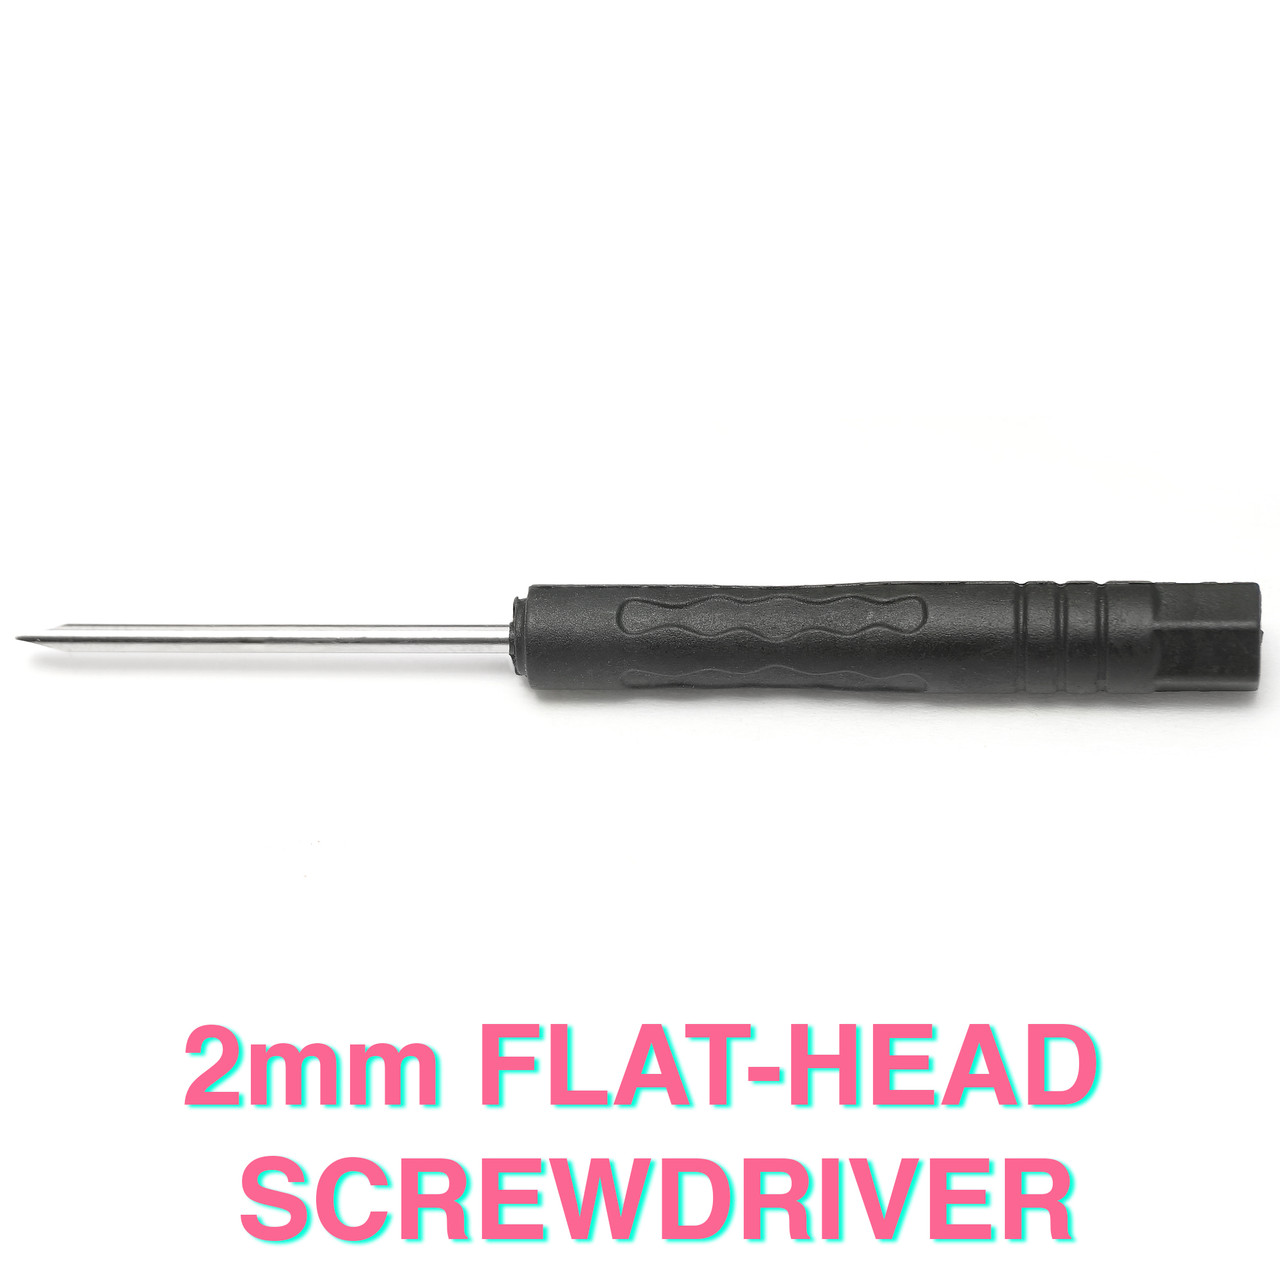 Allen Wrench/Hex Key/Allen Key for Knob Set Screws - Assorted Sizes